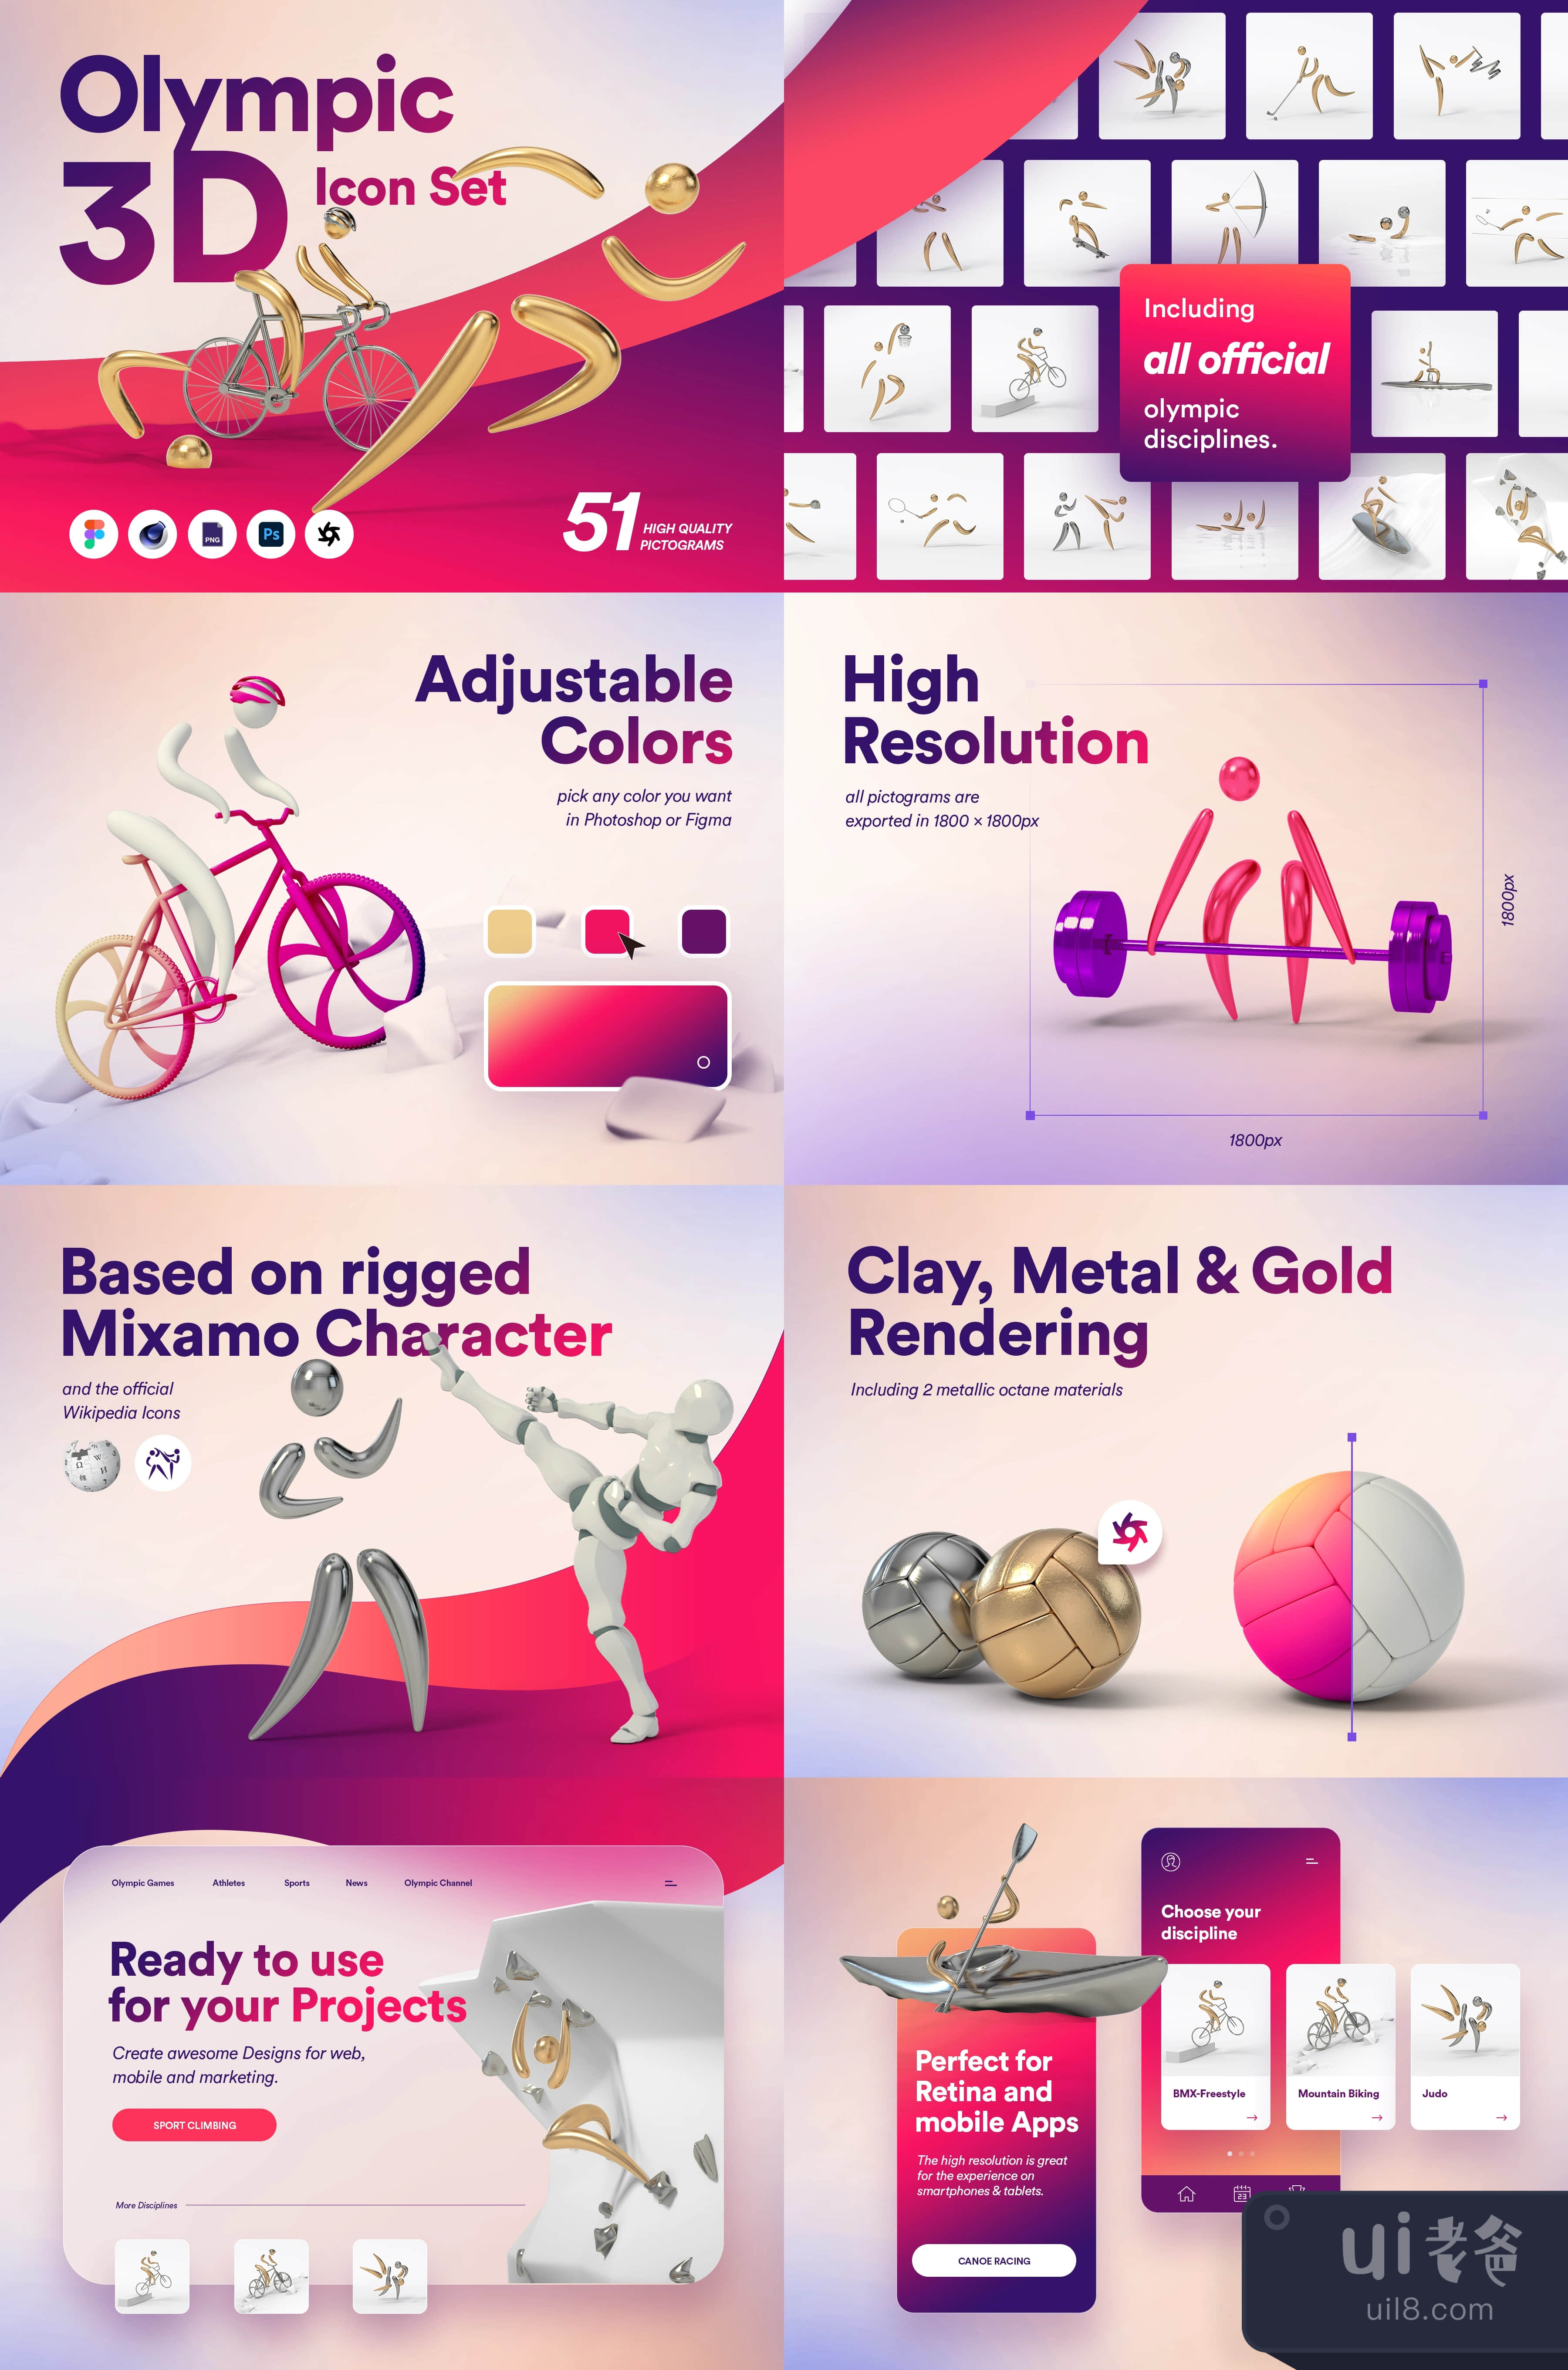 奥运会3D图标集 (Olympic 3D Icon Set)插图